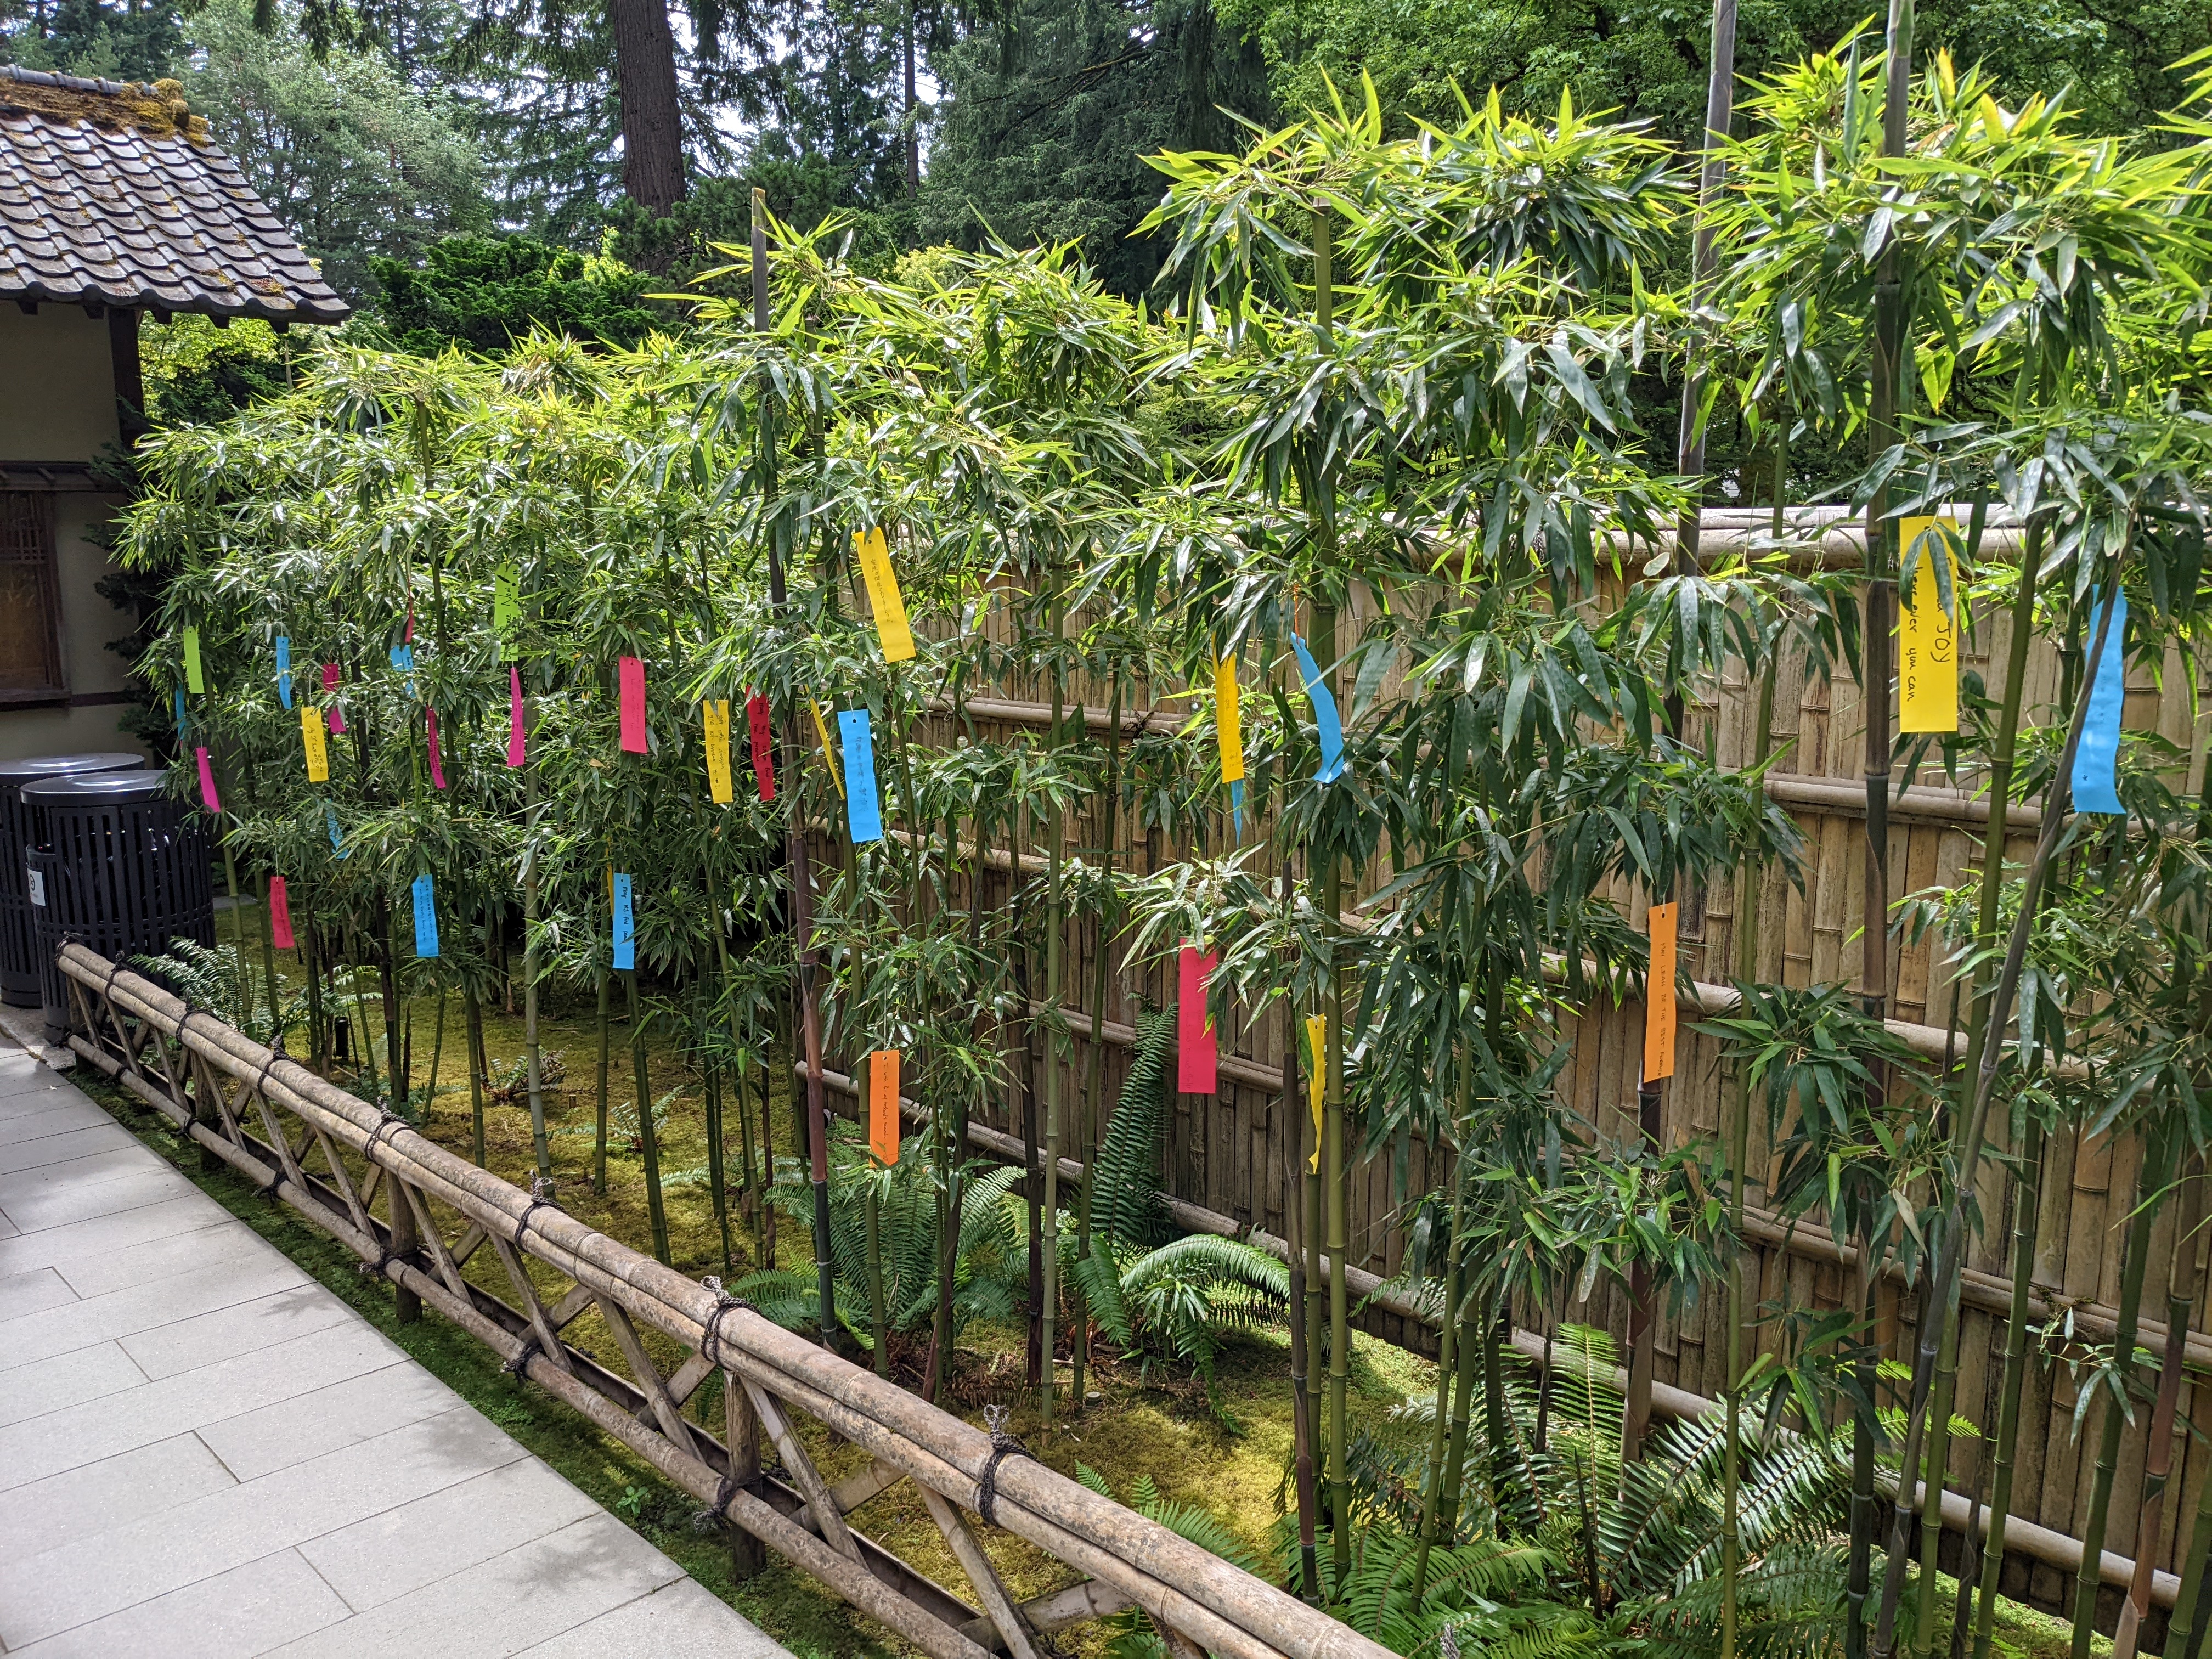 Tanzaku hanging on bamboo trees at the Portland Japanese Garden during Tanabata.